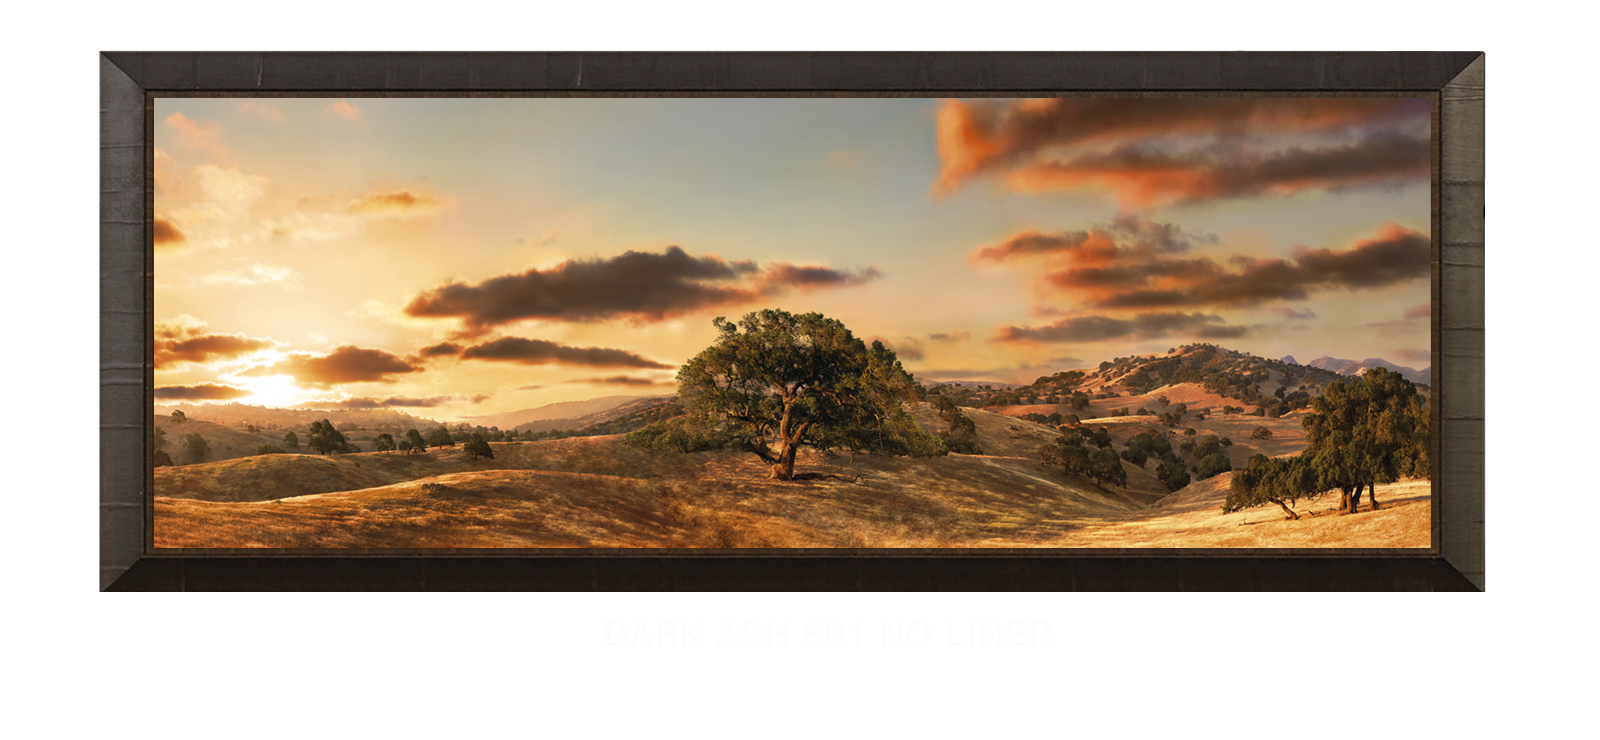 28OAKS Dark Ash 601 w_No Liner T